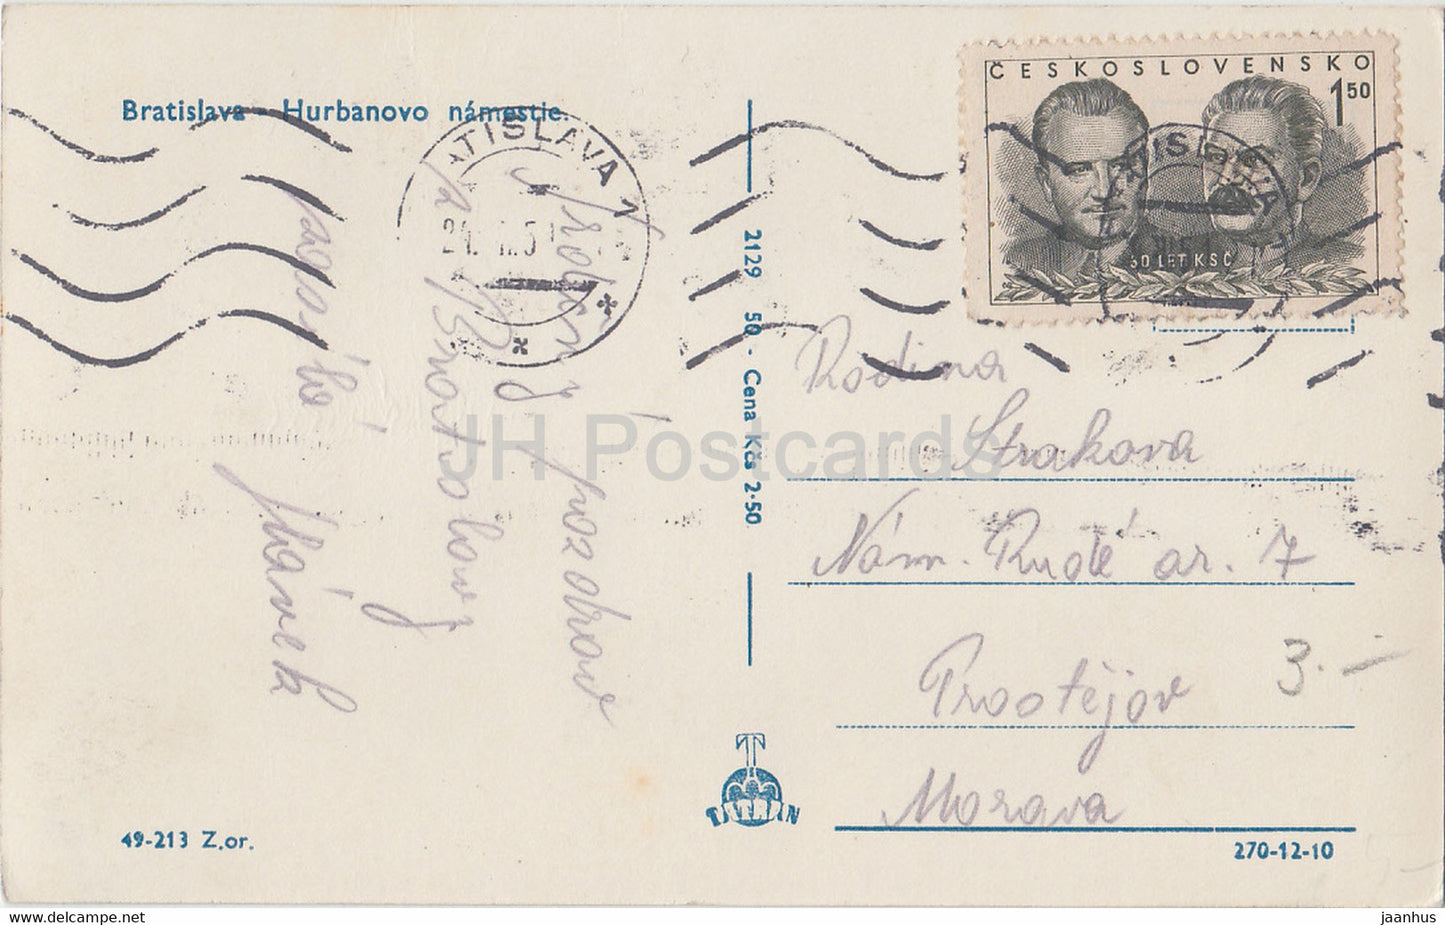 Bratislava - Hurbanovo namestie - tram - old postcard - Slovakia - Czechoslovakia - used